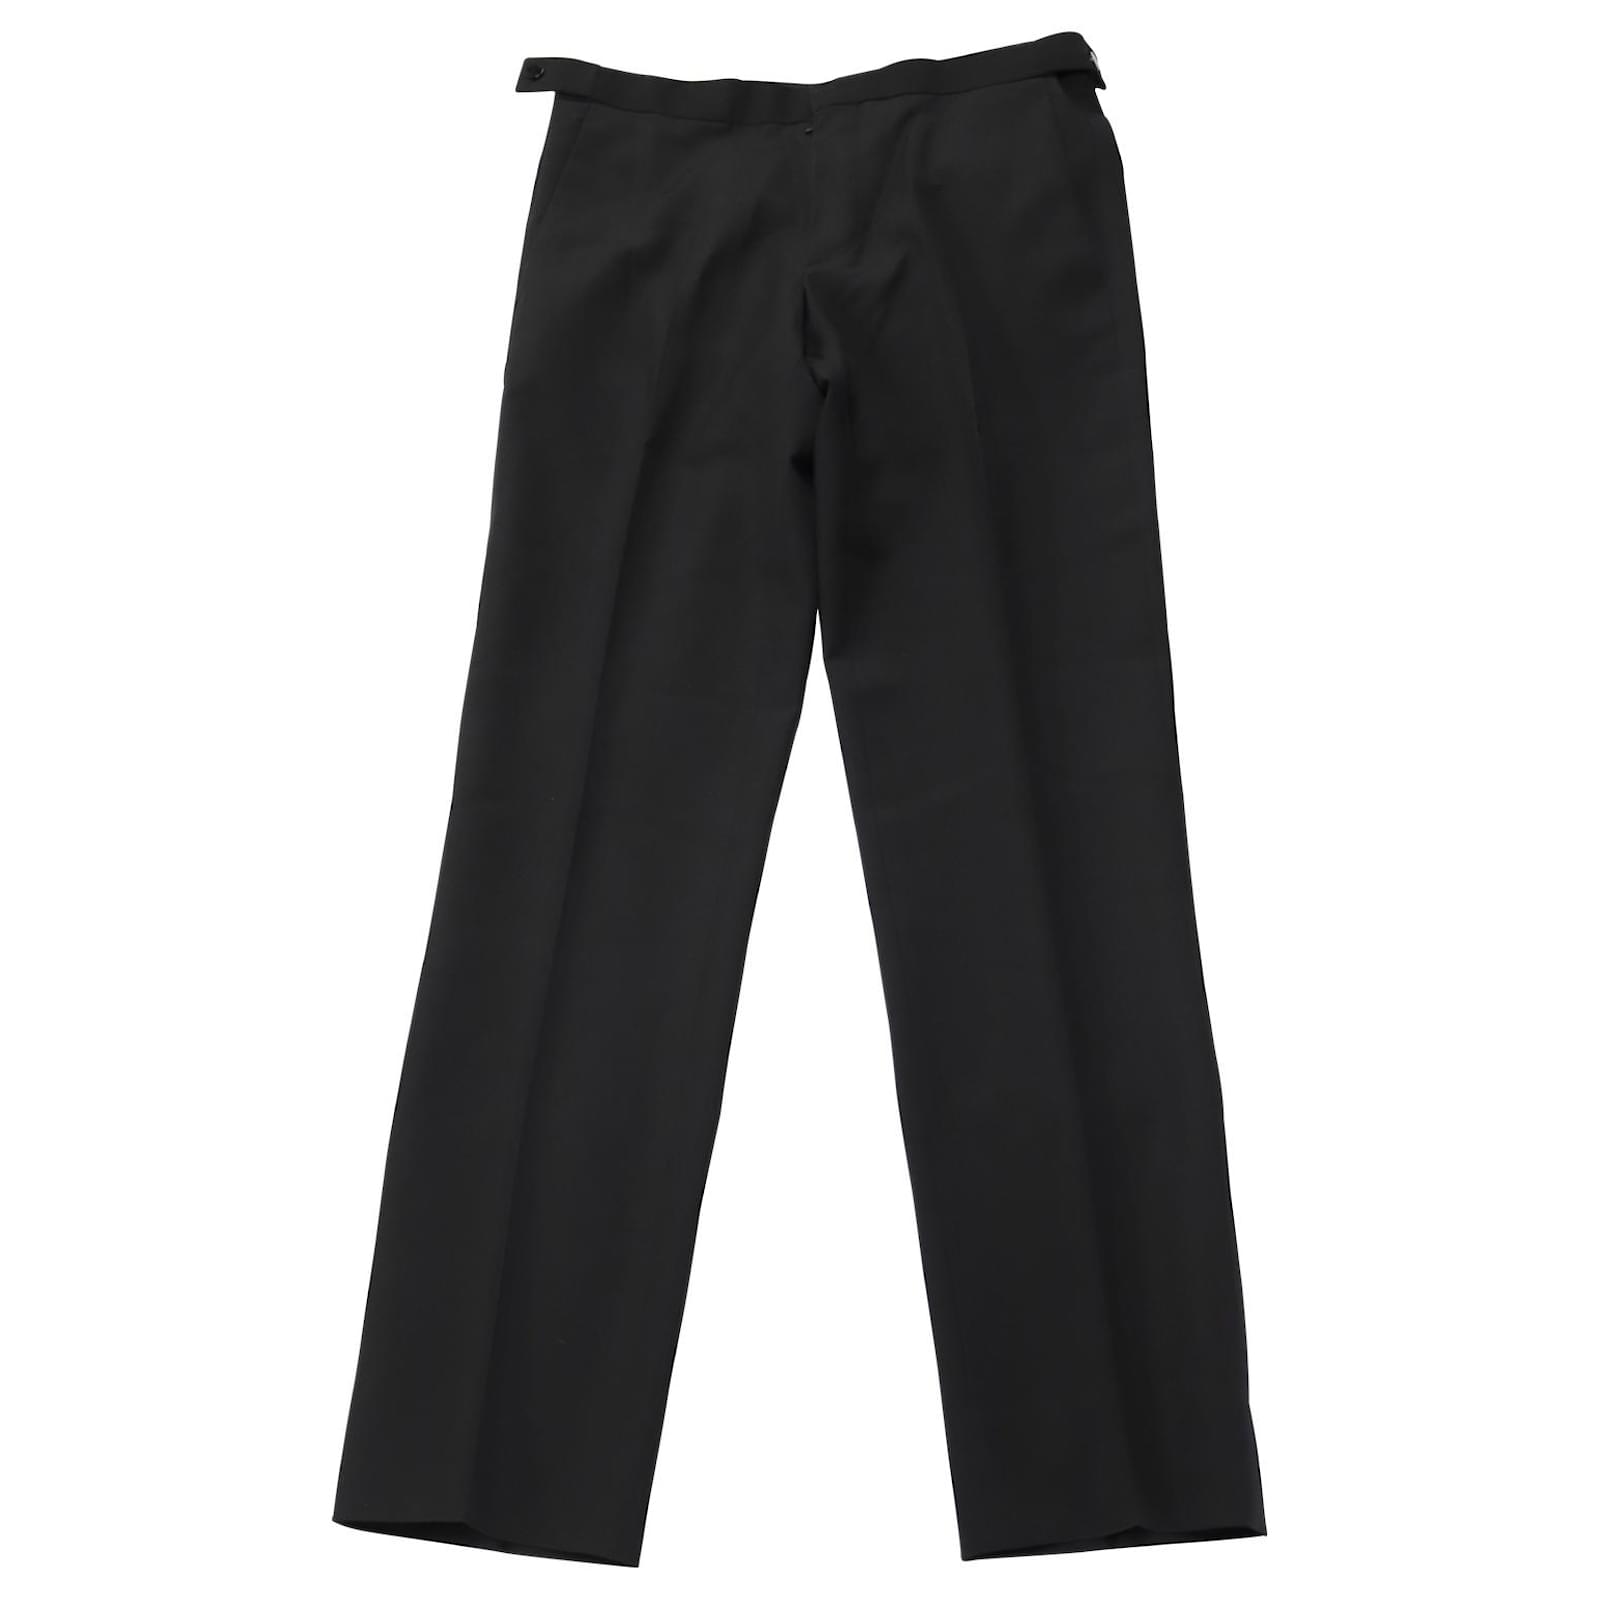 https://cdn1.jolicloset.com/imgr/full/2022/05/538340-1/other-dior-classic-trousers-in-black-virgin-wool-misc.jpg